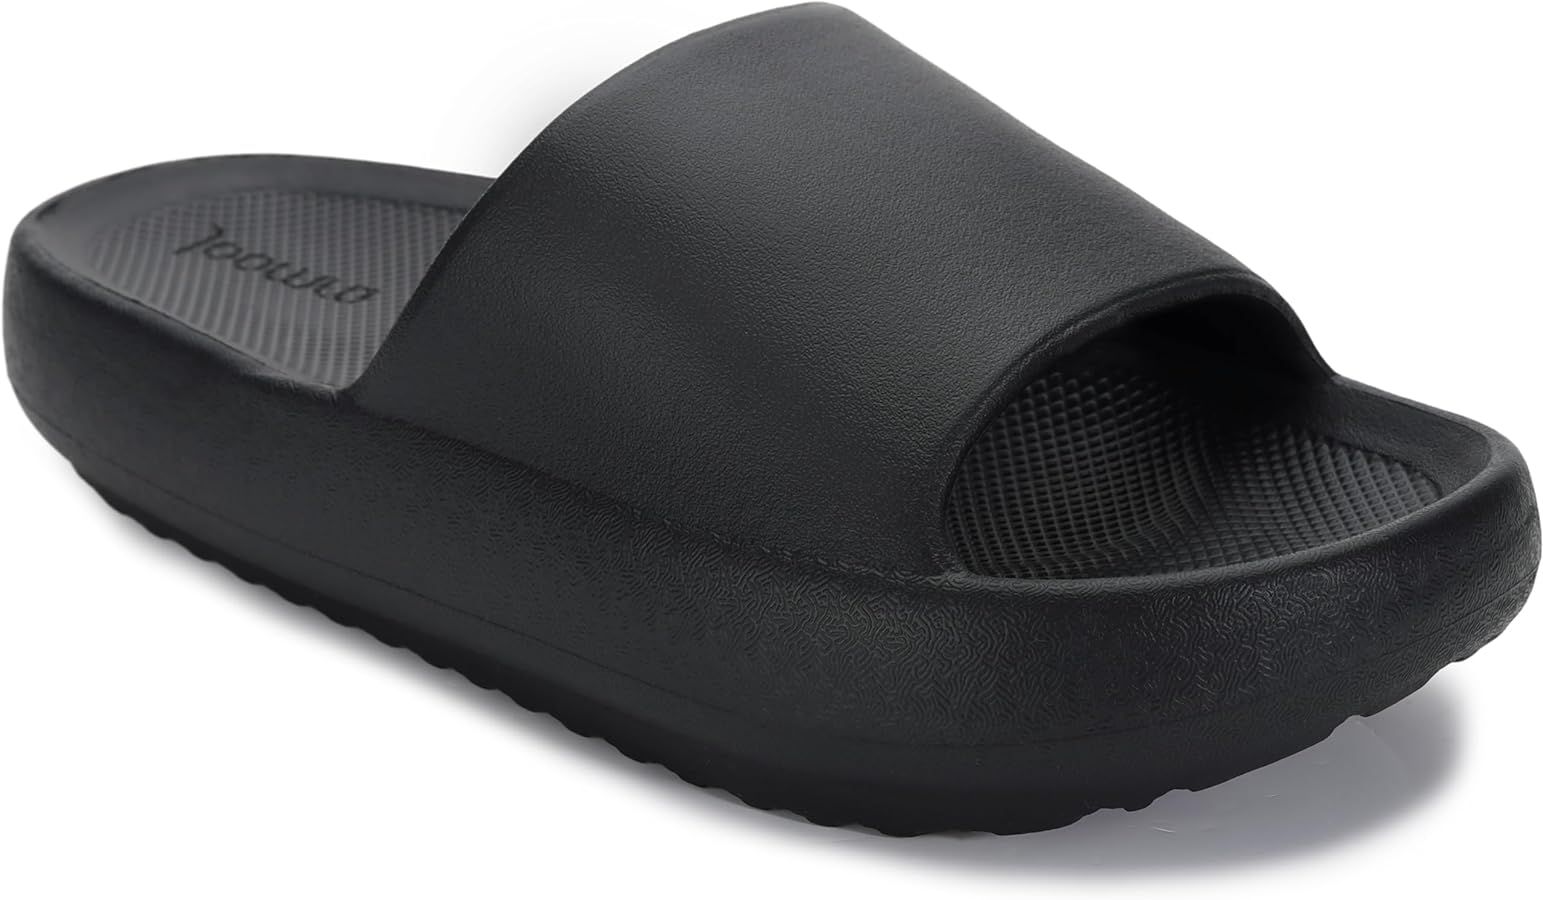 Joomra Pillow Slippers for Women and Men Non Slip Quick Drying Shower Slides Bathroom Sandals | U... | Amazon (US)